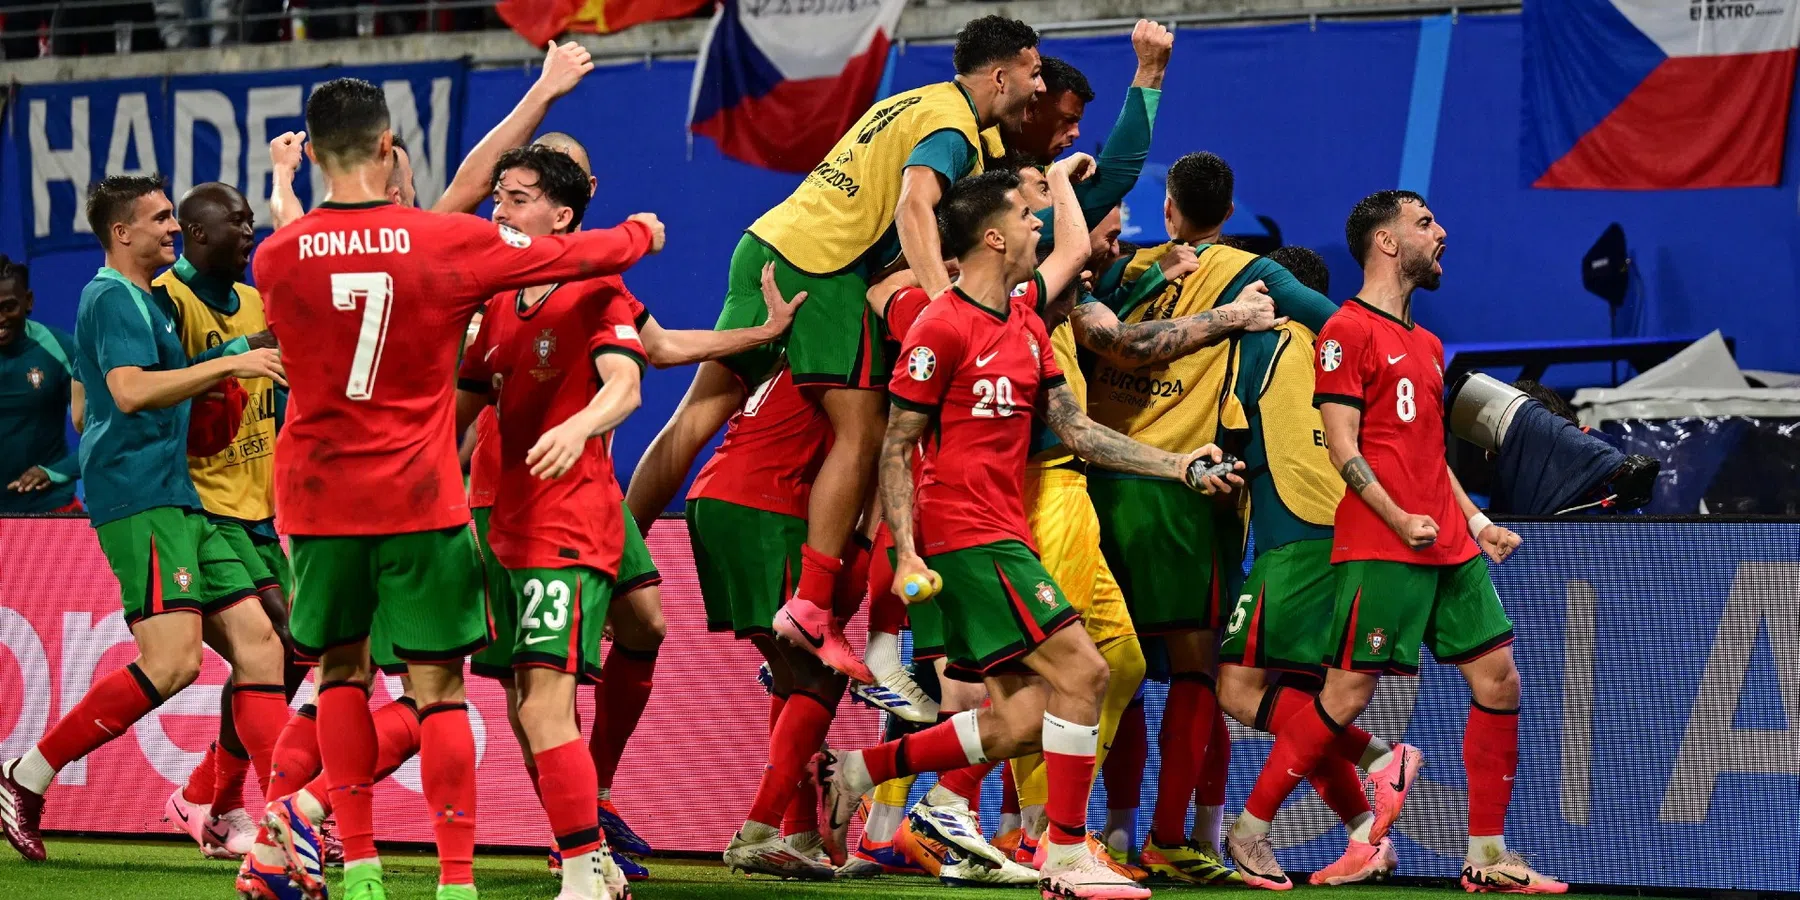 Zo reageren supporters op X na de wedstrijd Portugal - Tsjechië